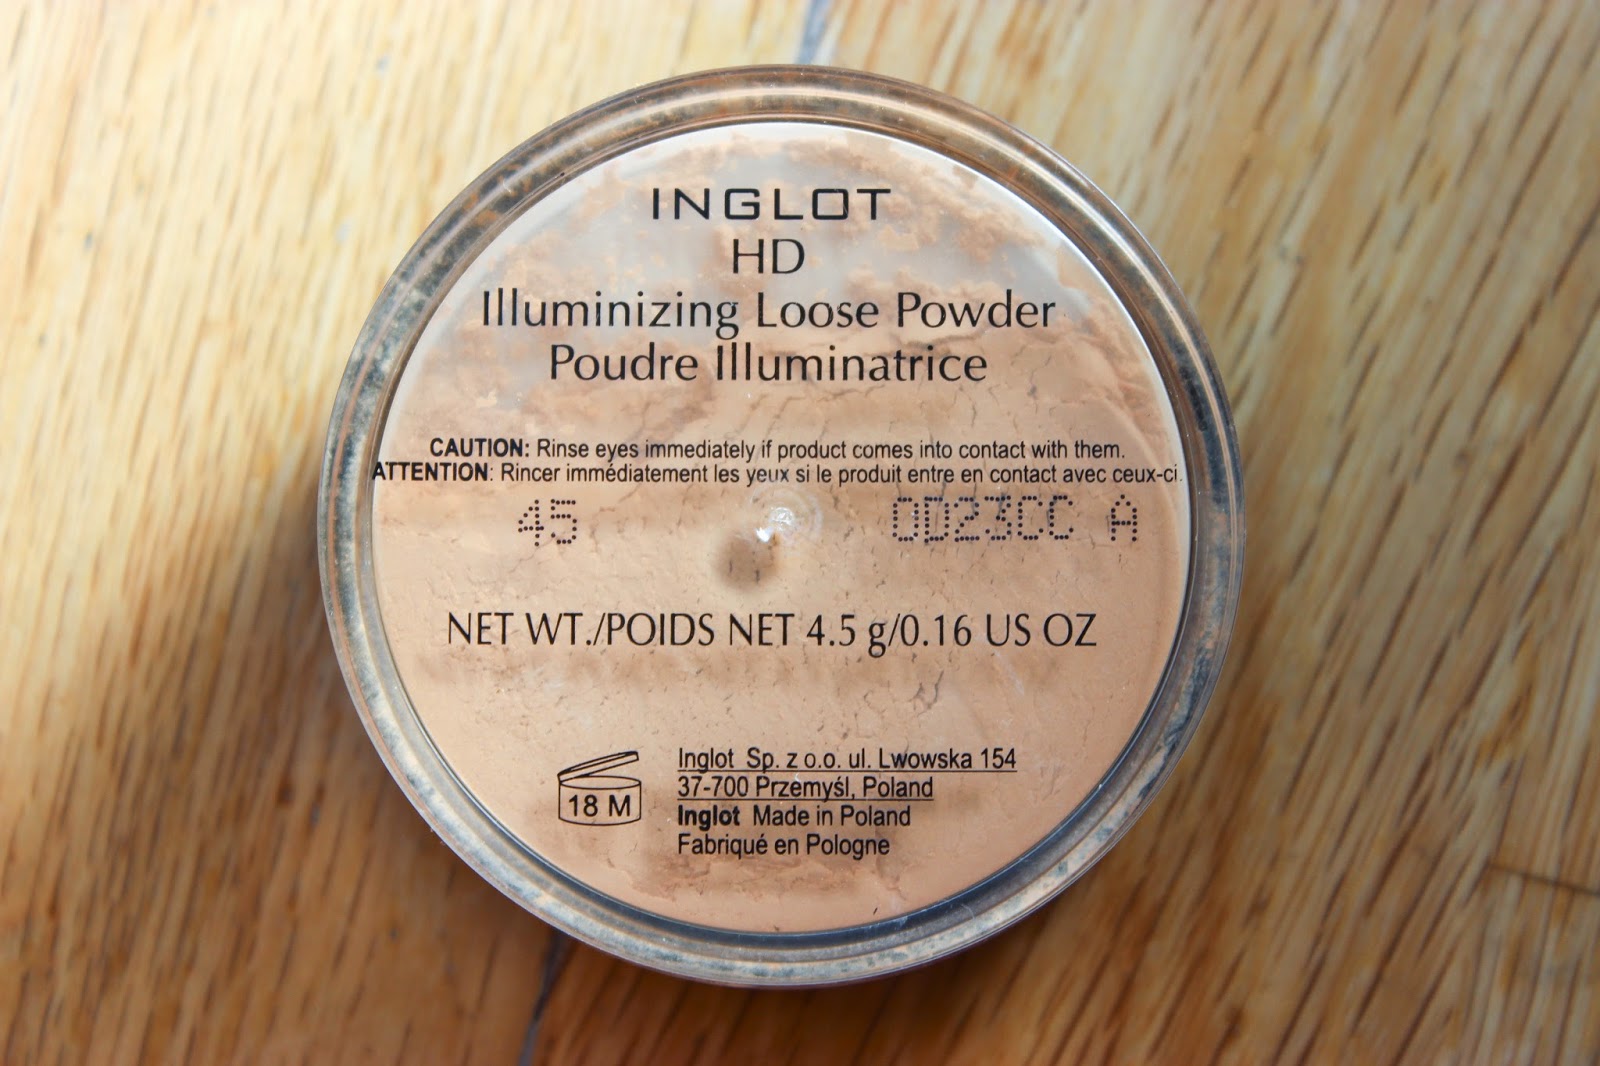 Inglot HD Illuminizing Loose Powder in 45 DiscoveriesOfSelf Blog Beauty Blogger NC50